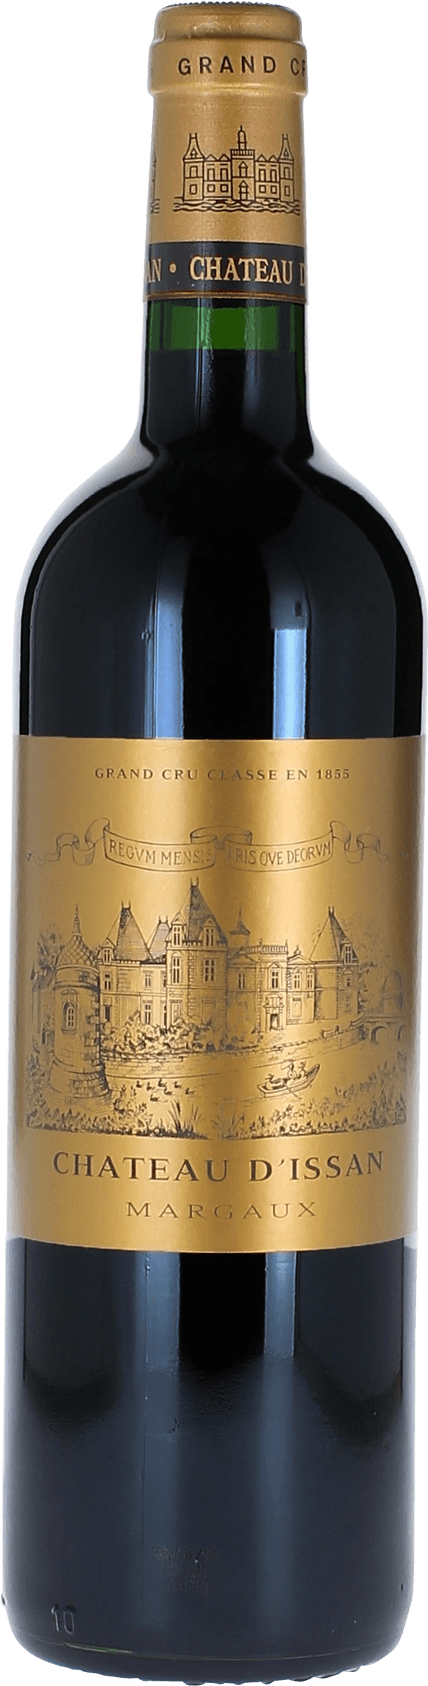 Issan 1990 3me Grand cru class Margaux, Bordeaux rouge